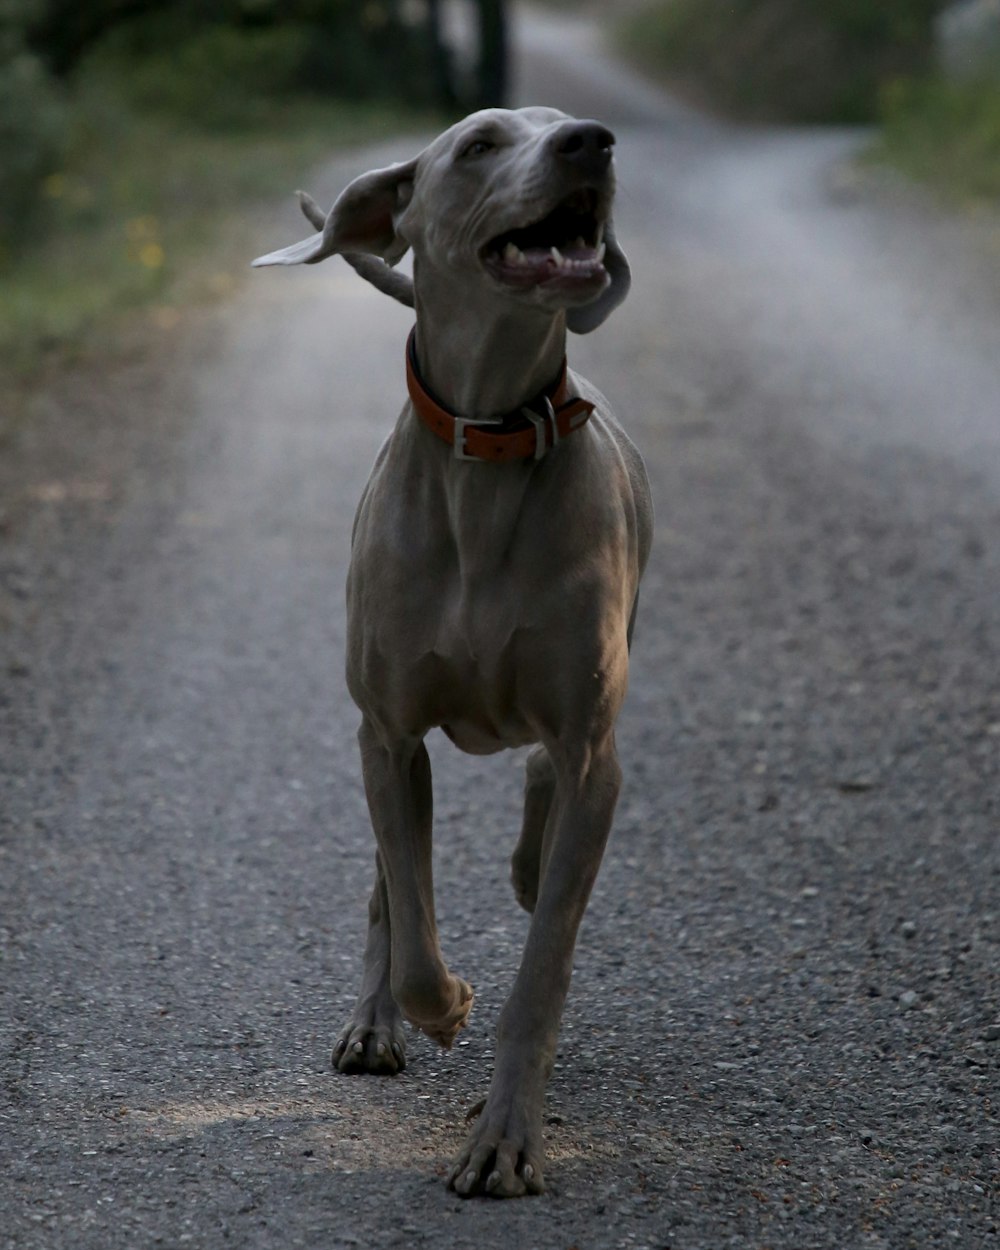 brown short coat large dog on grey concrete road during daytime